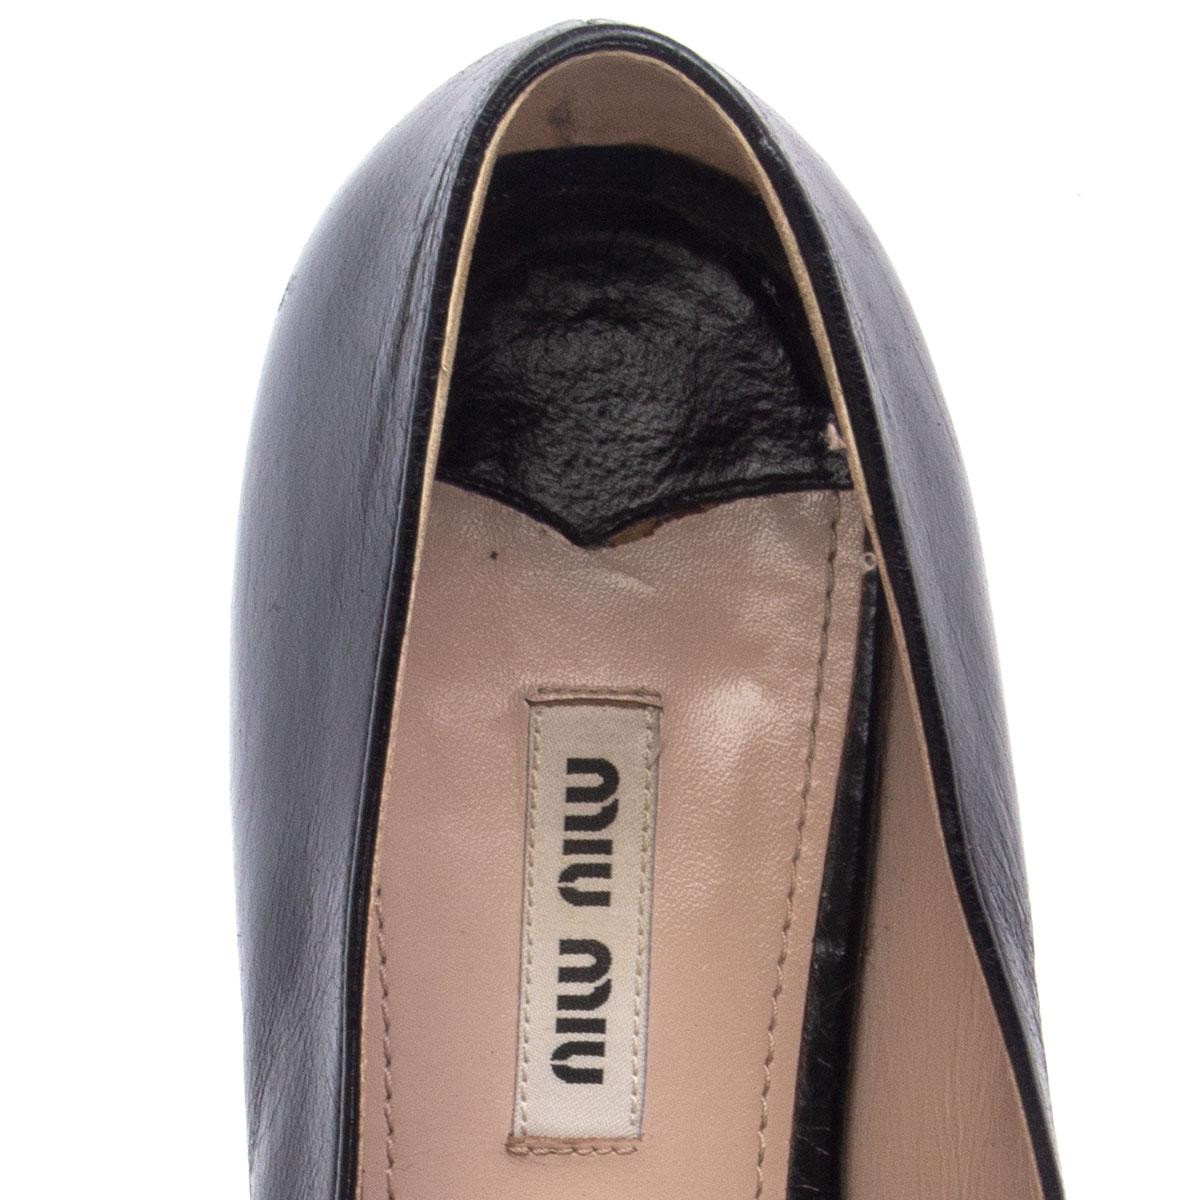 Black MIU MIU black & white leather COLORBLOCK Loafers Flats Shoes 38